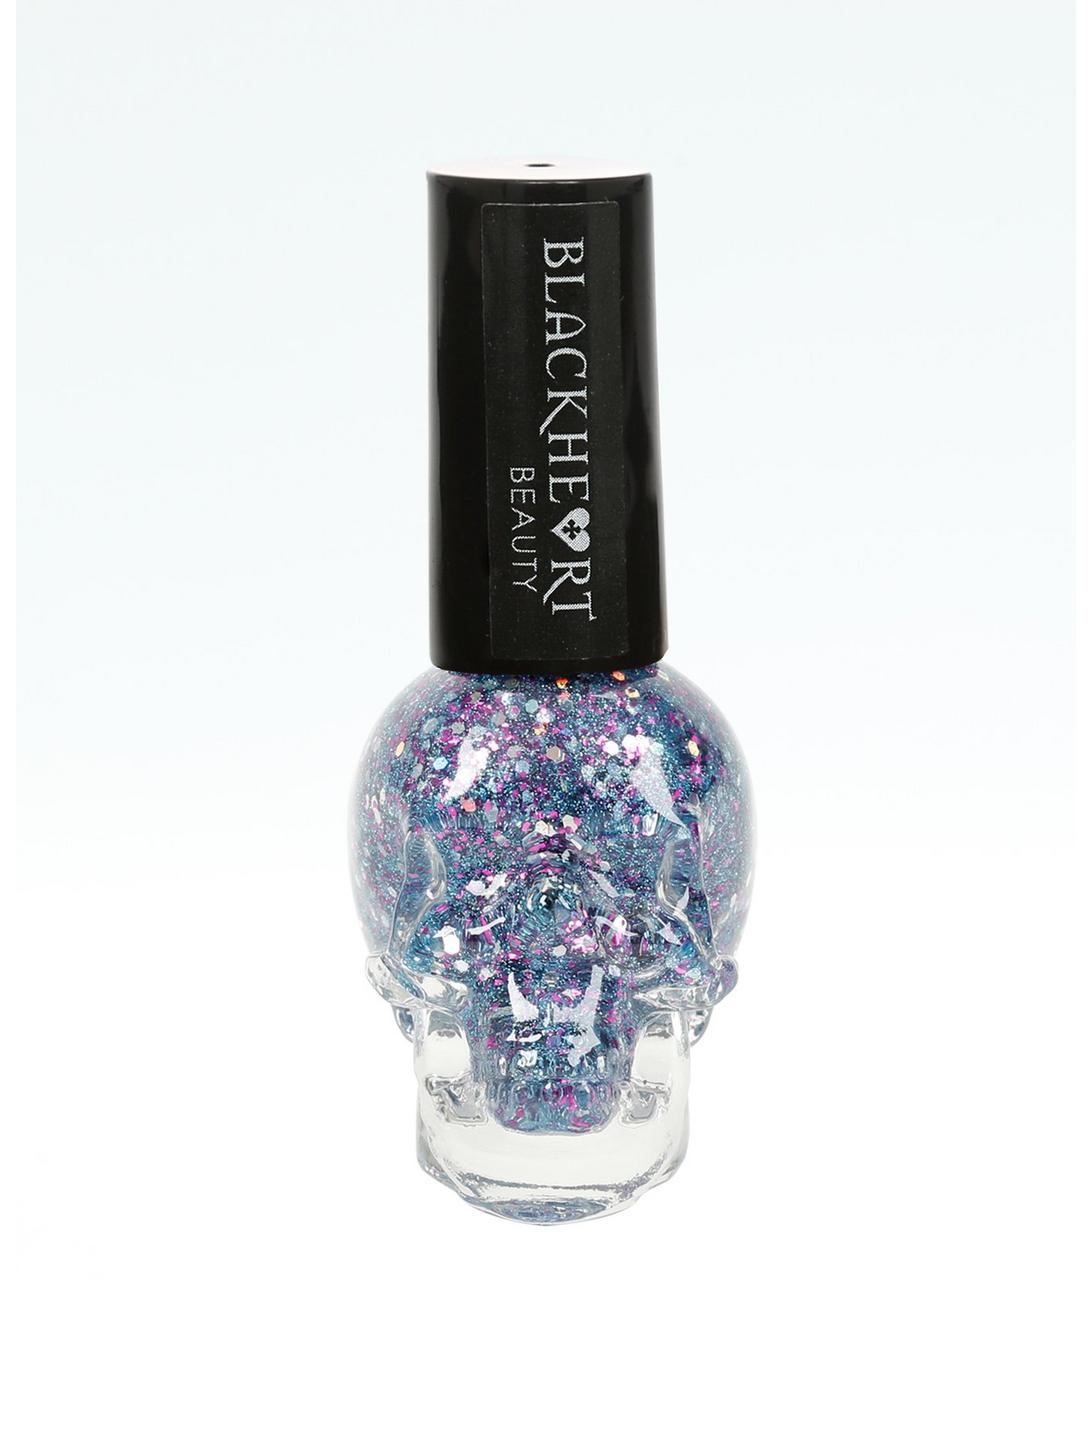 Blackheart Beauty Blue Glitter With Magenta & Silver Splatter Nail Polish, , hi-res